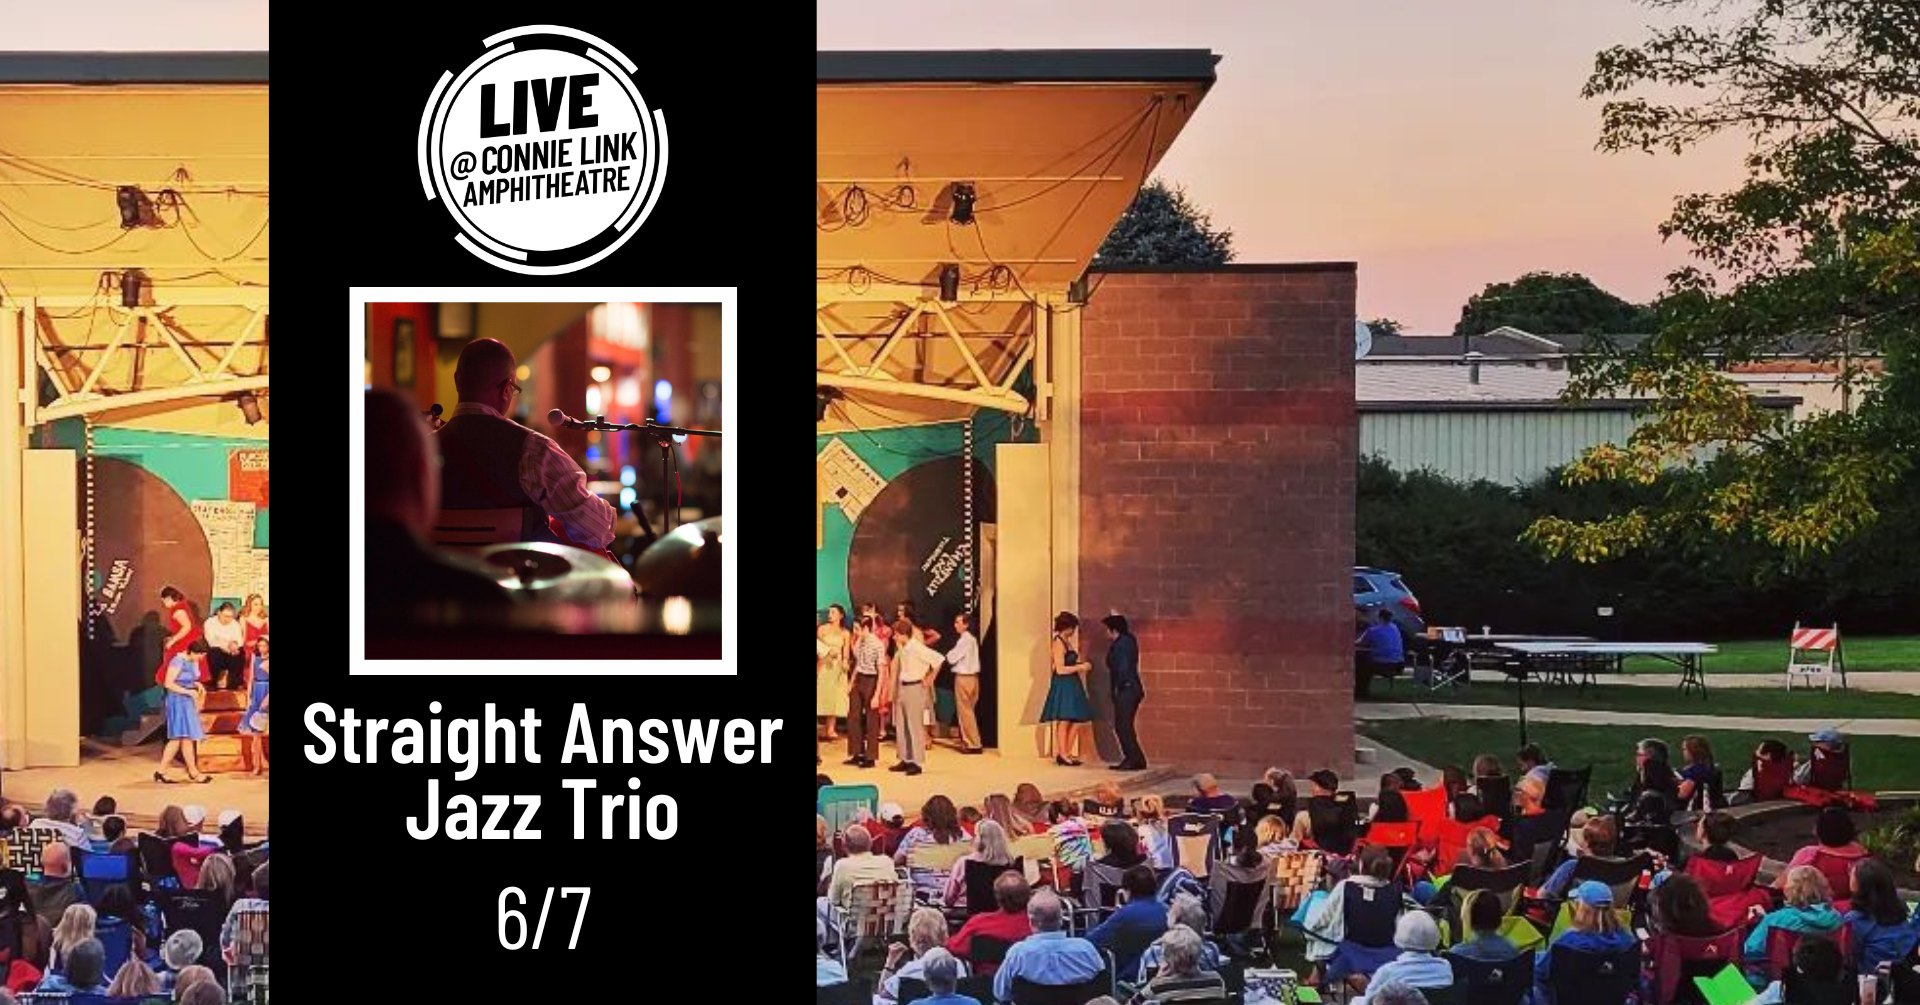 Normal LIVE presents Straight Answer Jazz Trio @ Connie Link Amphitheatre